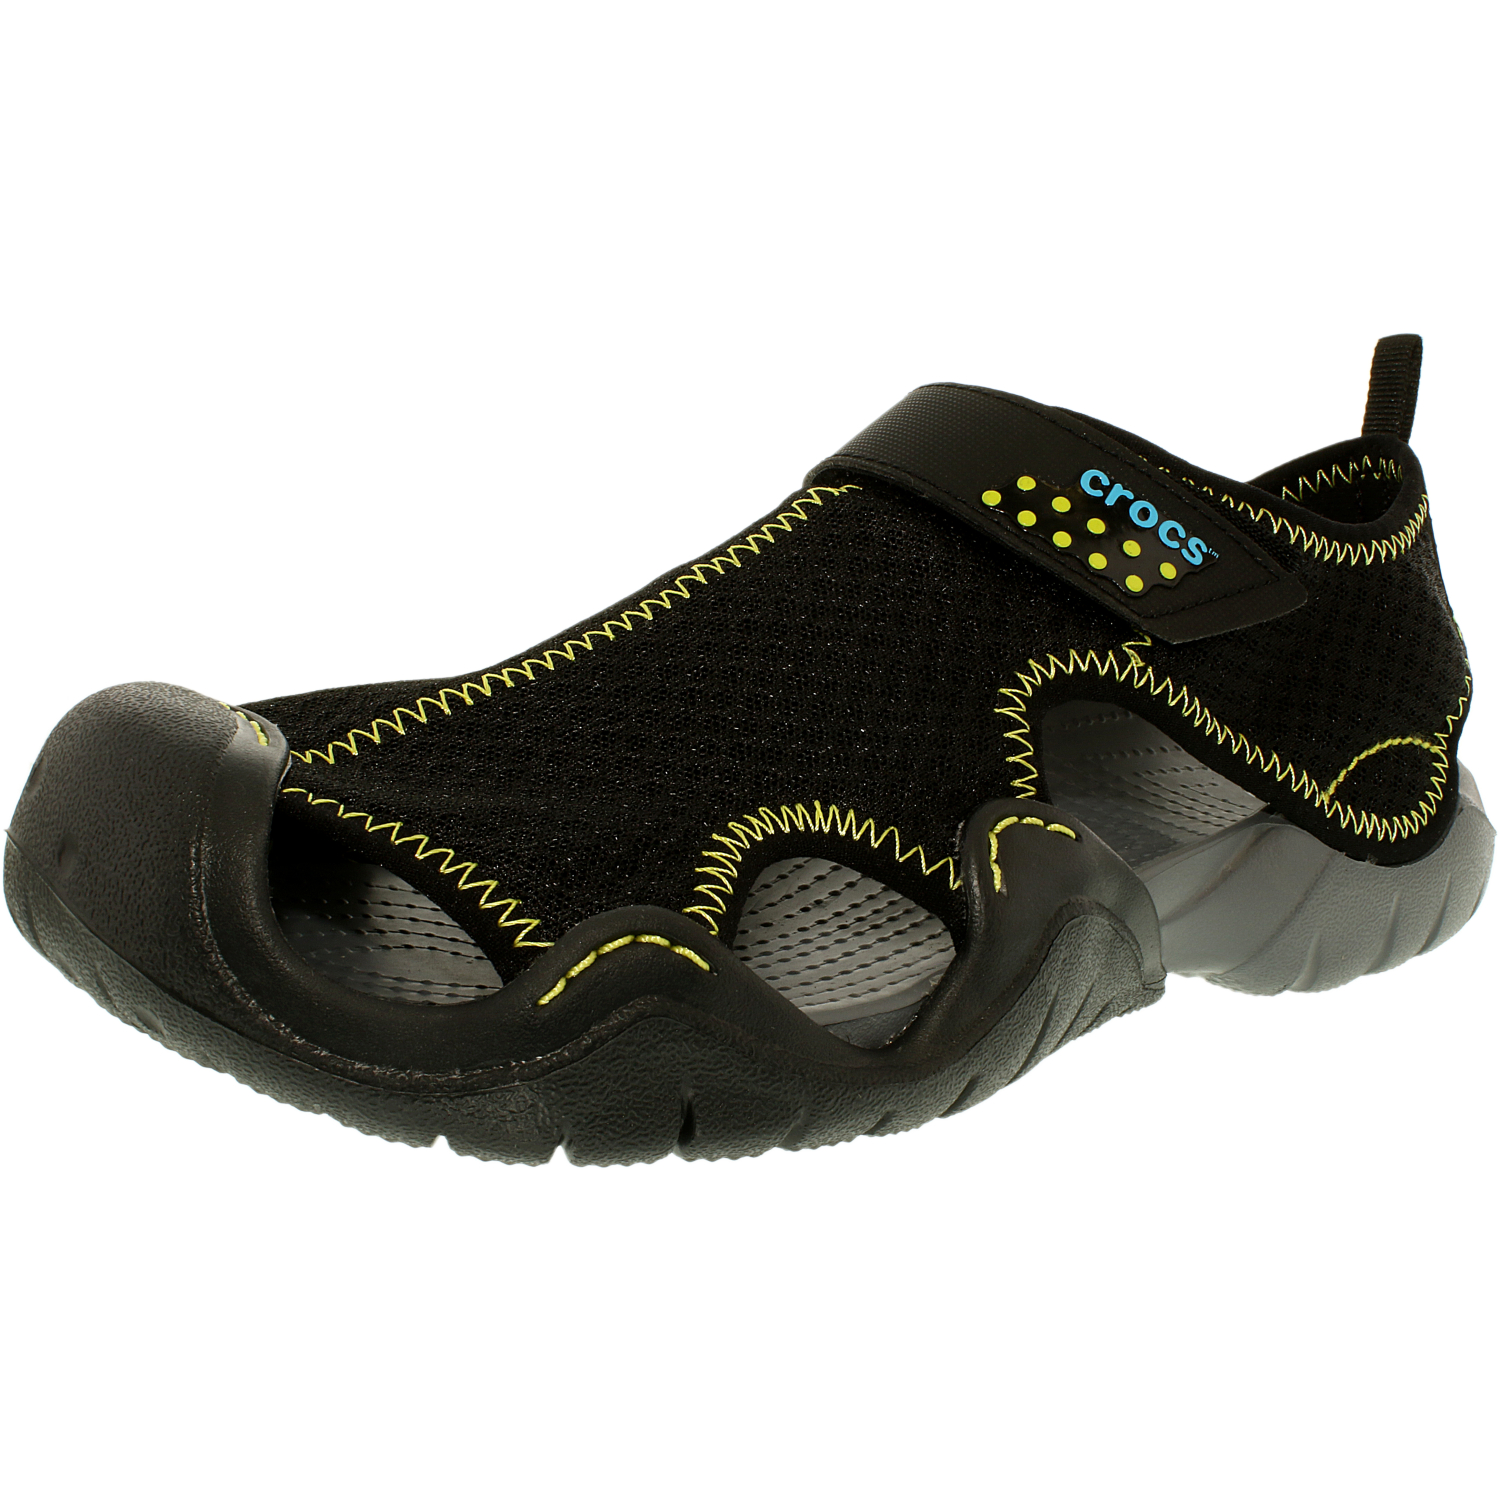 Crocs Men's Swiftwater Sandal Ankle-High Rubber